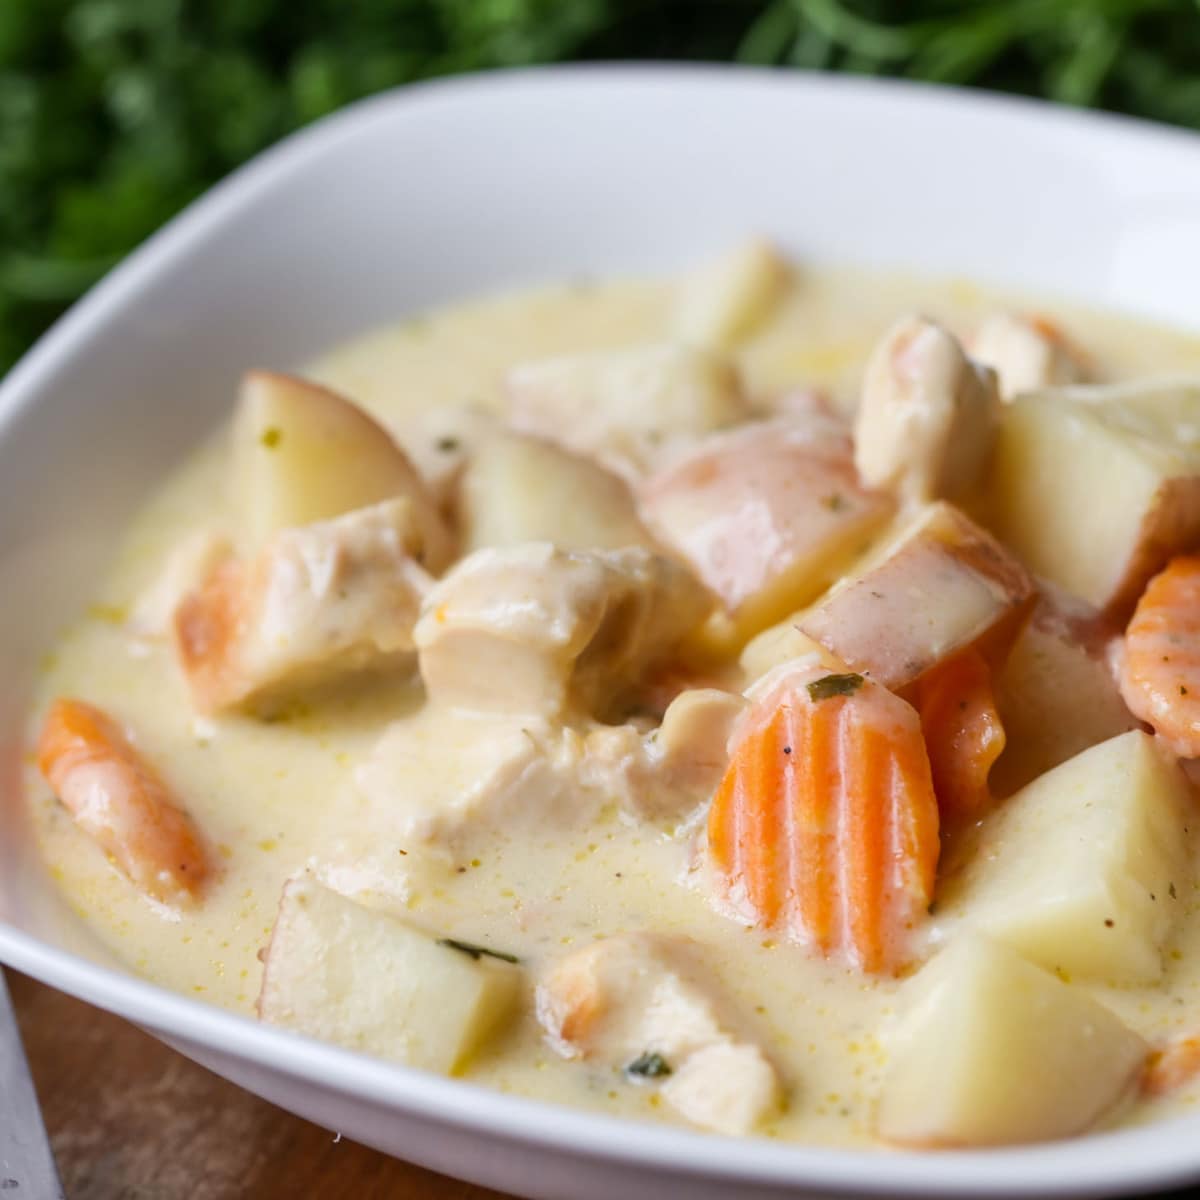 Crockpot soup recipes - crock pot chicken stew in a white bowl.